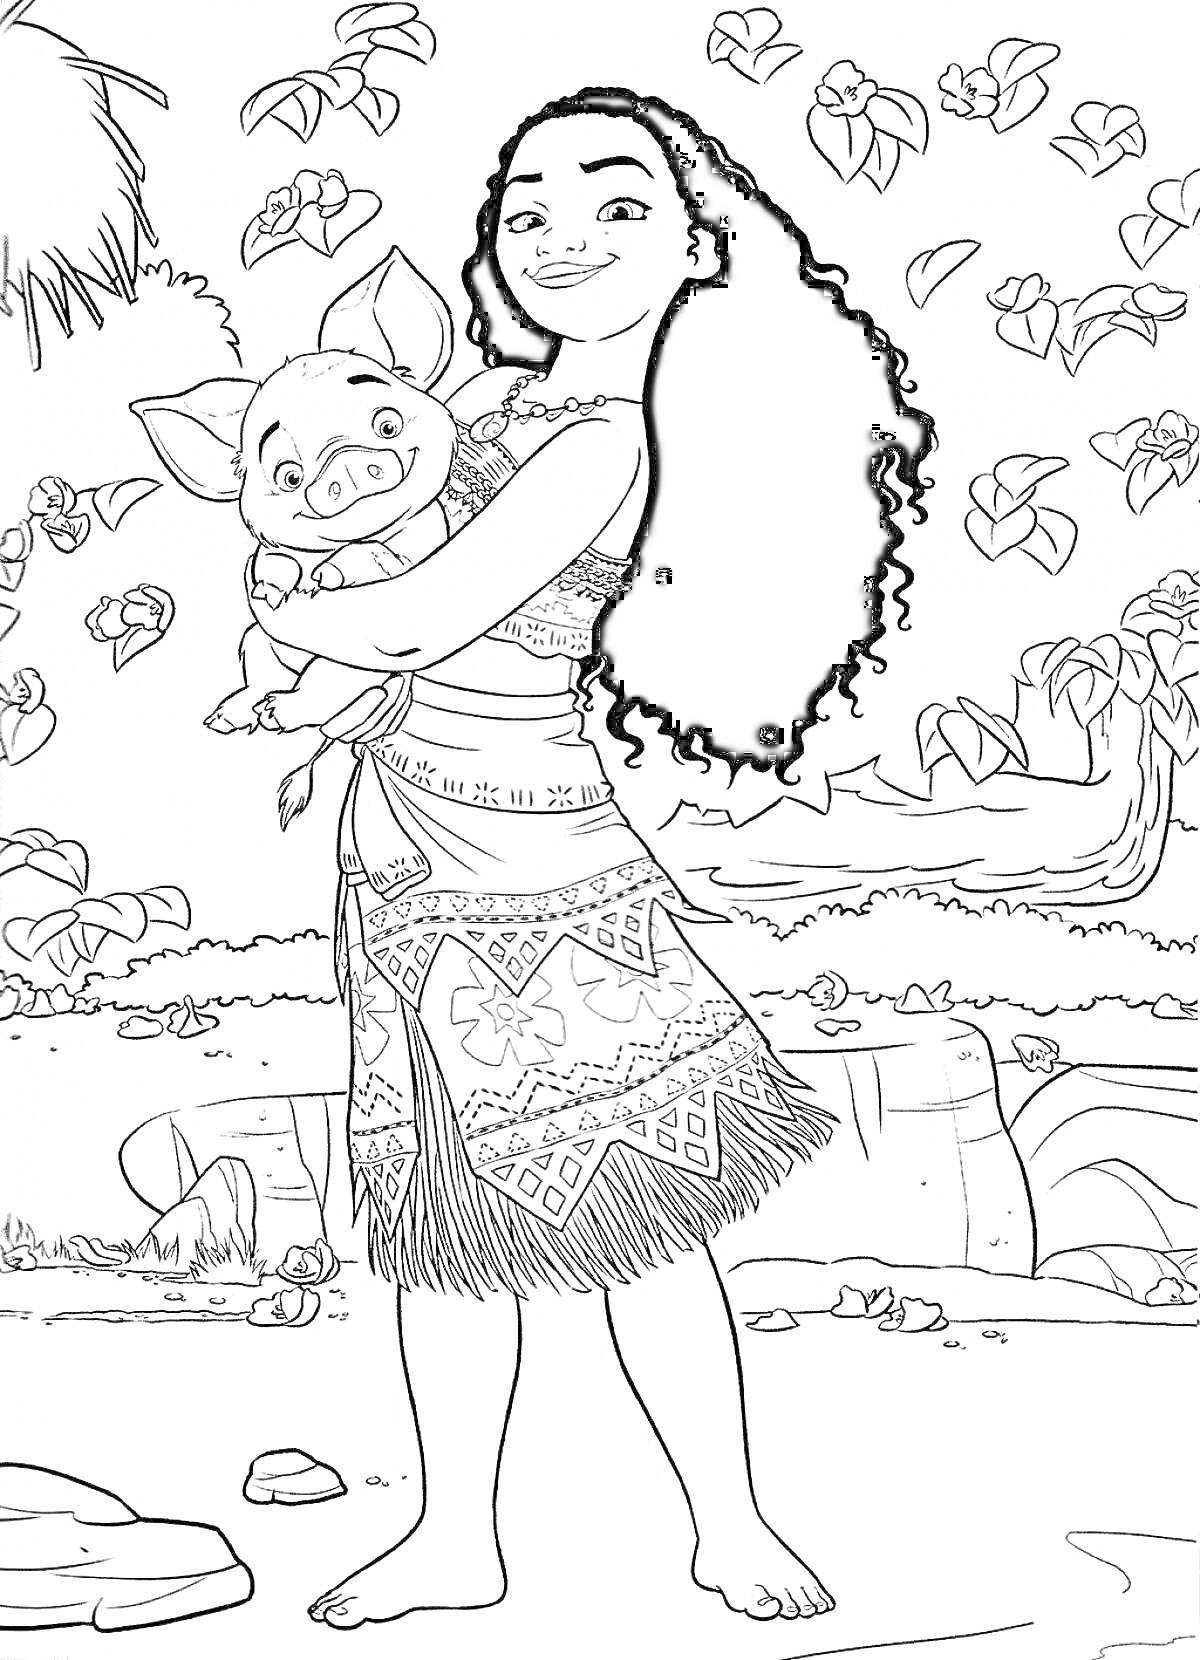 Раскраска Моана с поросенком на руках на фоне джунглей